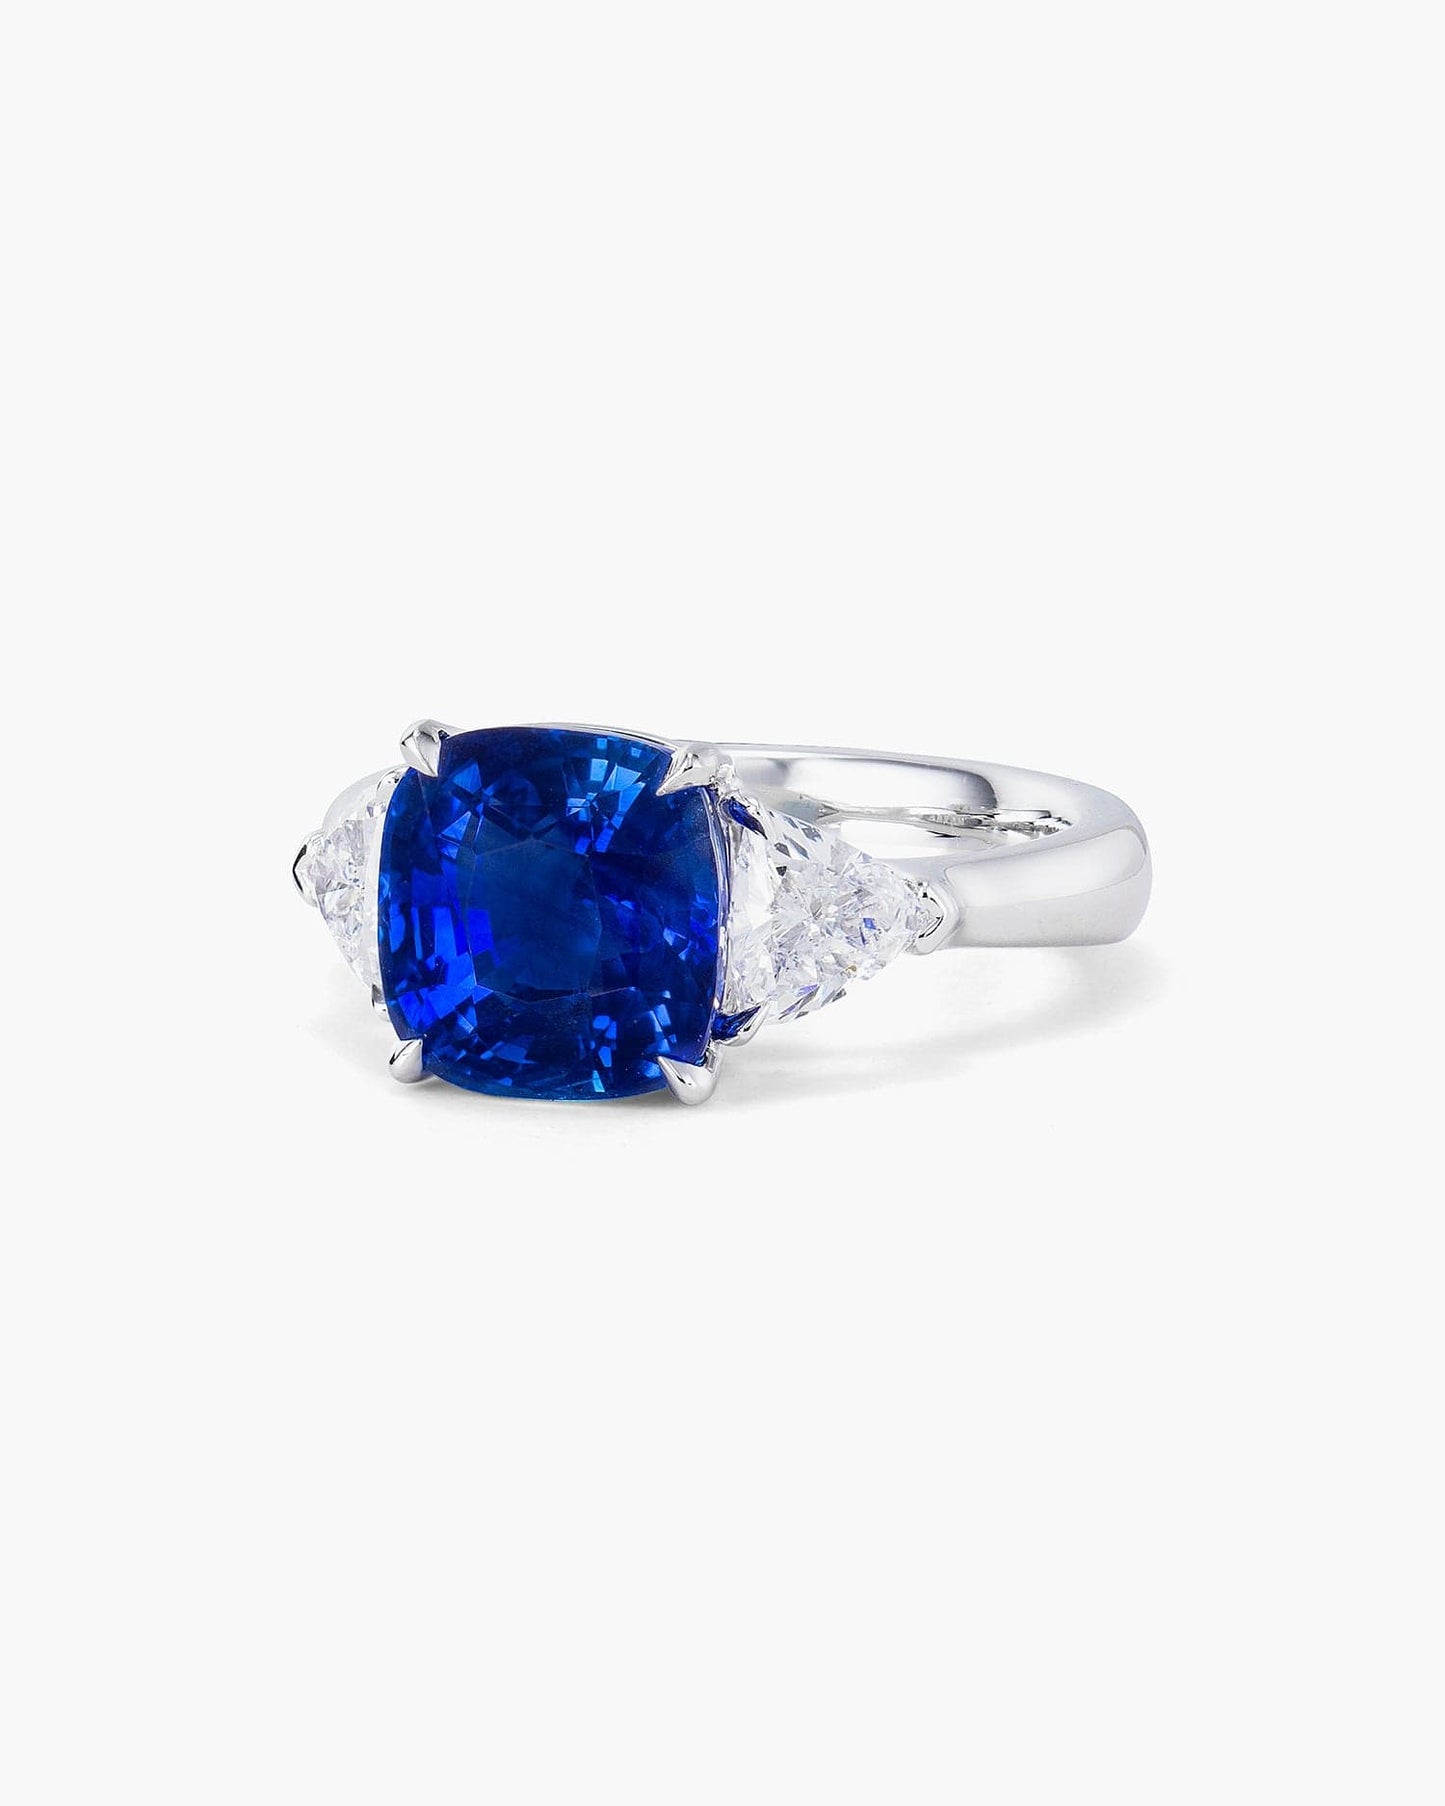 4.54 carat Cushion Cut Ceylon Sapphire and Diamond Ring